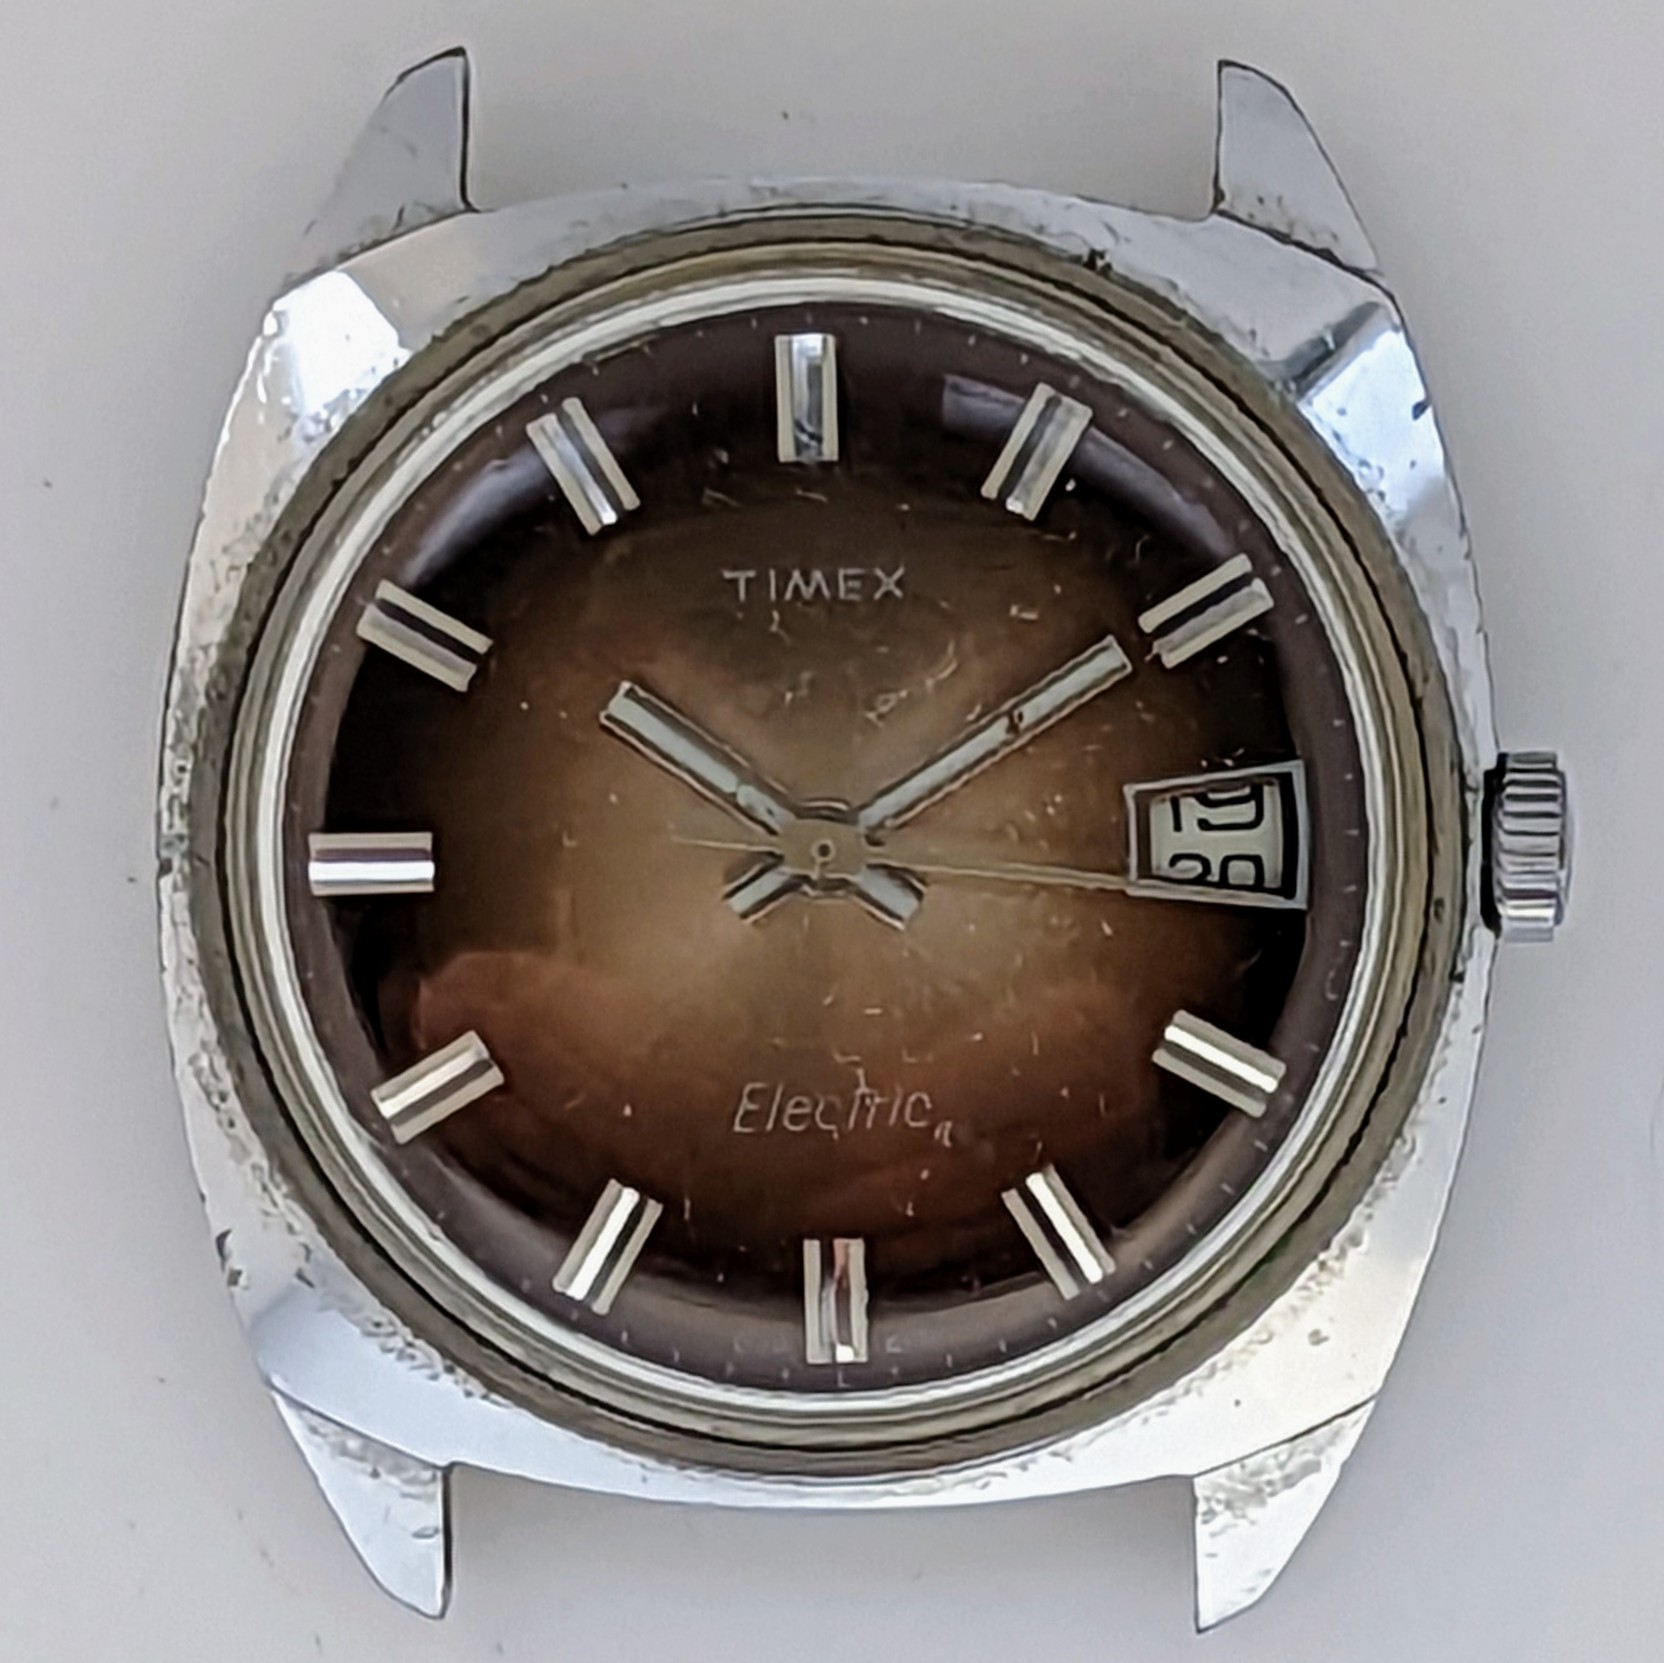 Timex Electric 1981 Ref. 0311 4171